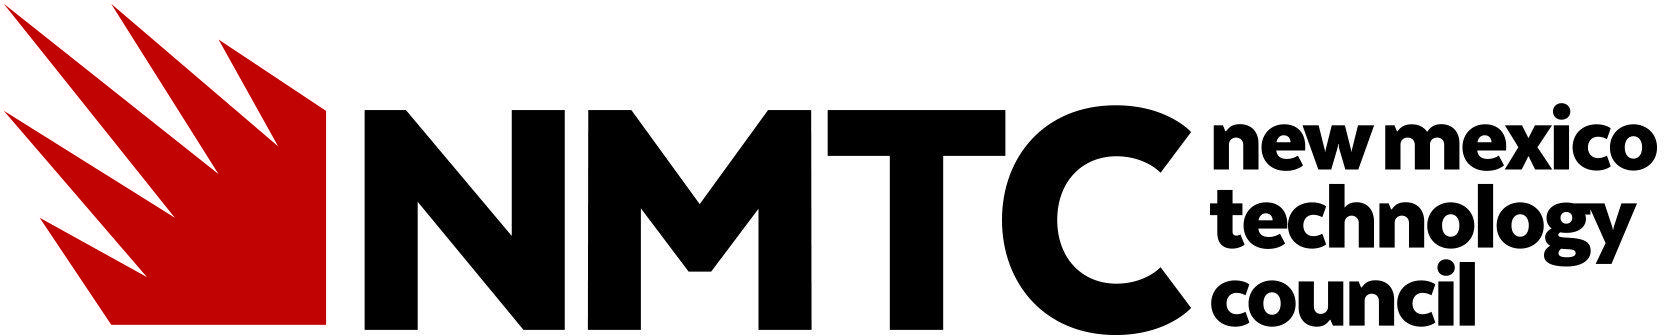 Nmtsc Logo - NMTC Logo Horizontal - New Mexico Technology Council